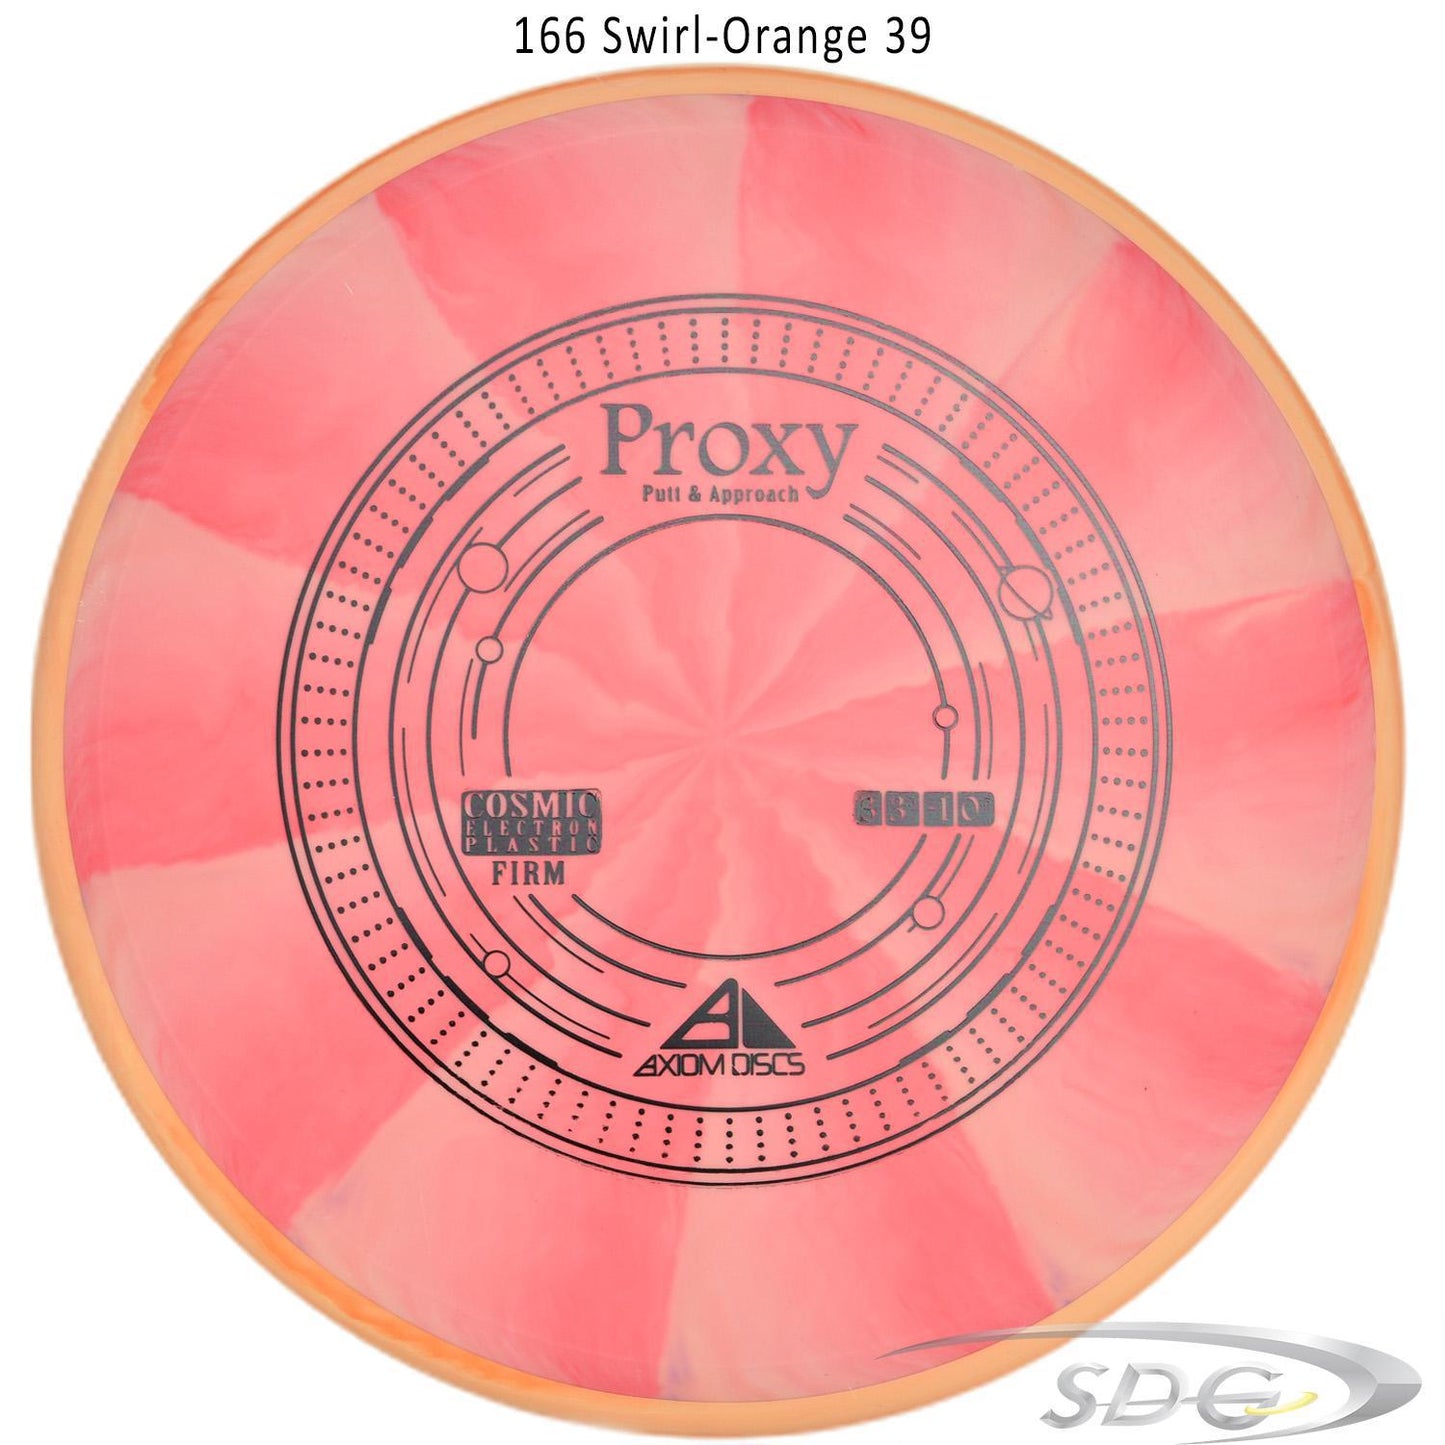 axiom-cosmic-electron-proxy-firm-disc-golf-putt-approach 166 Swirl-Orange 39 